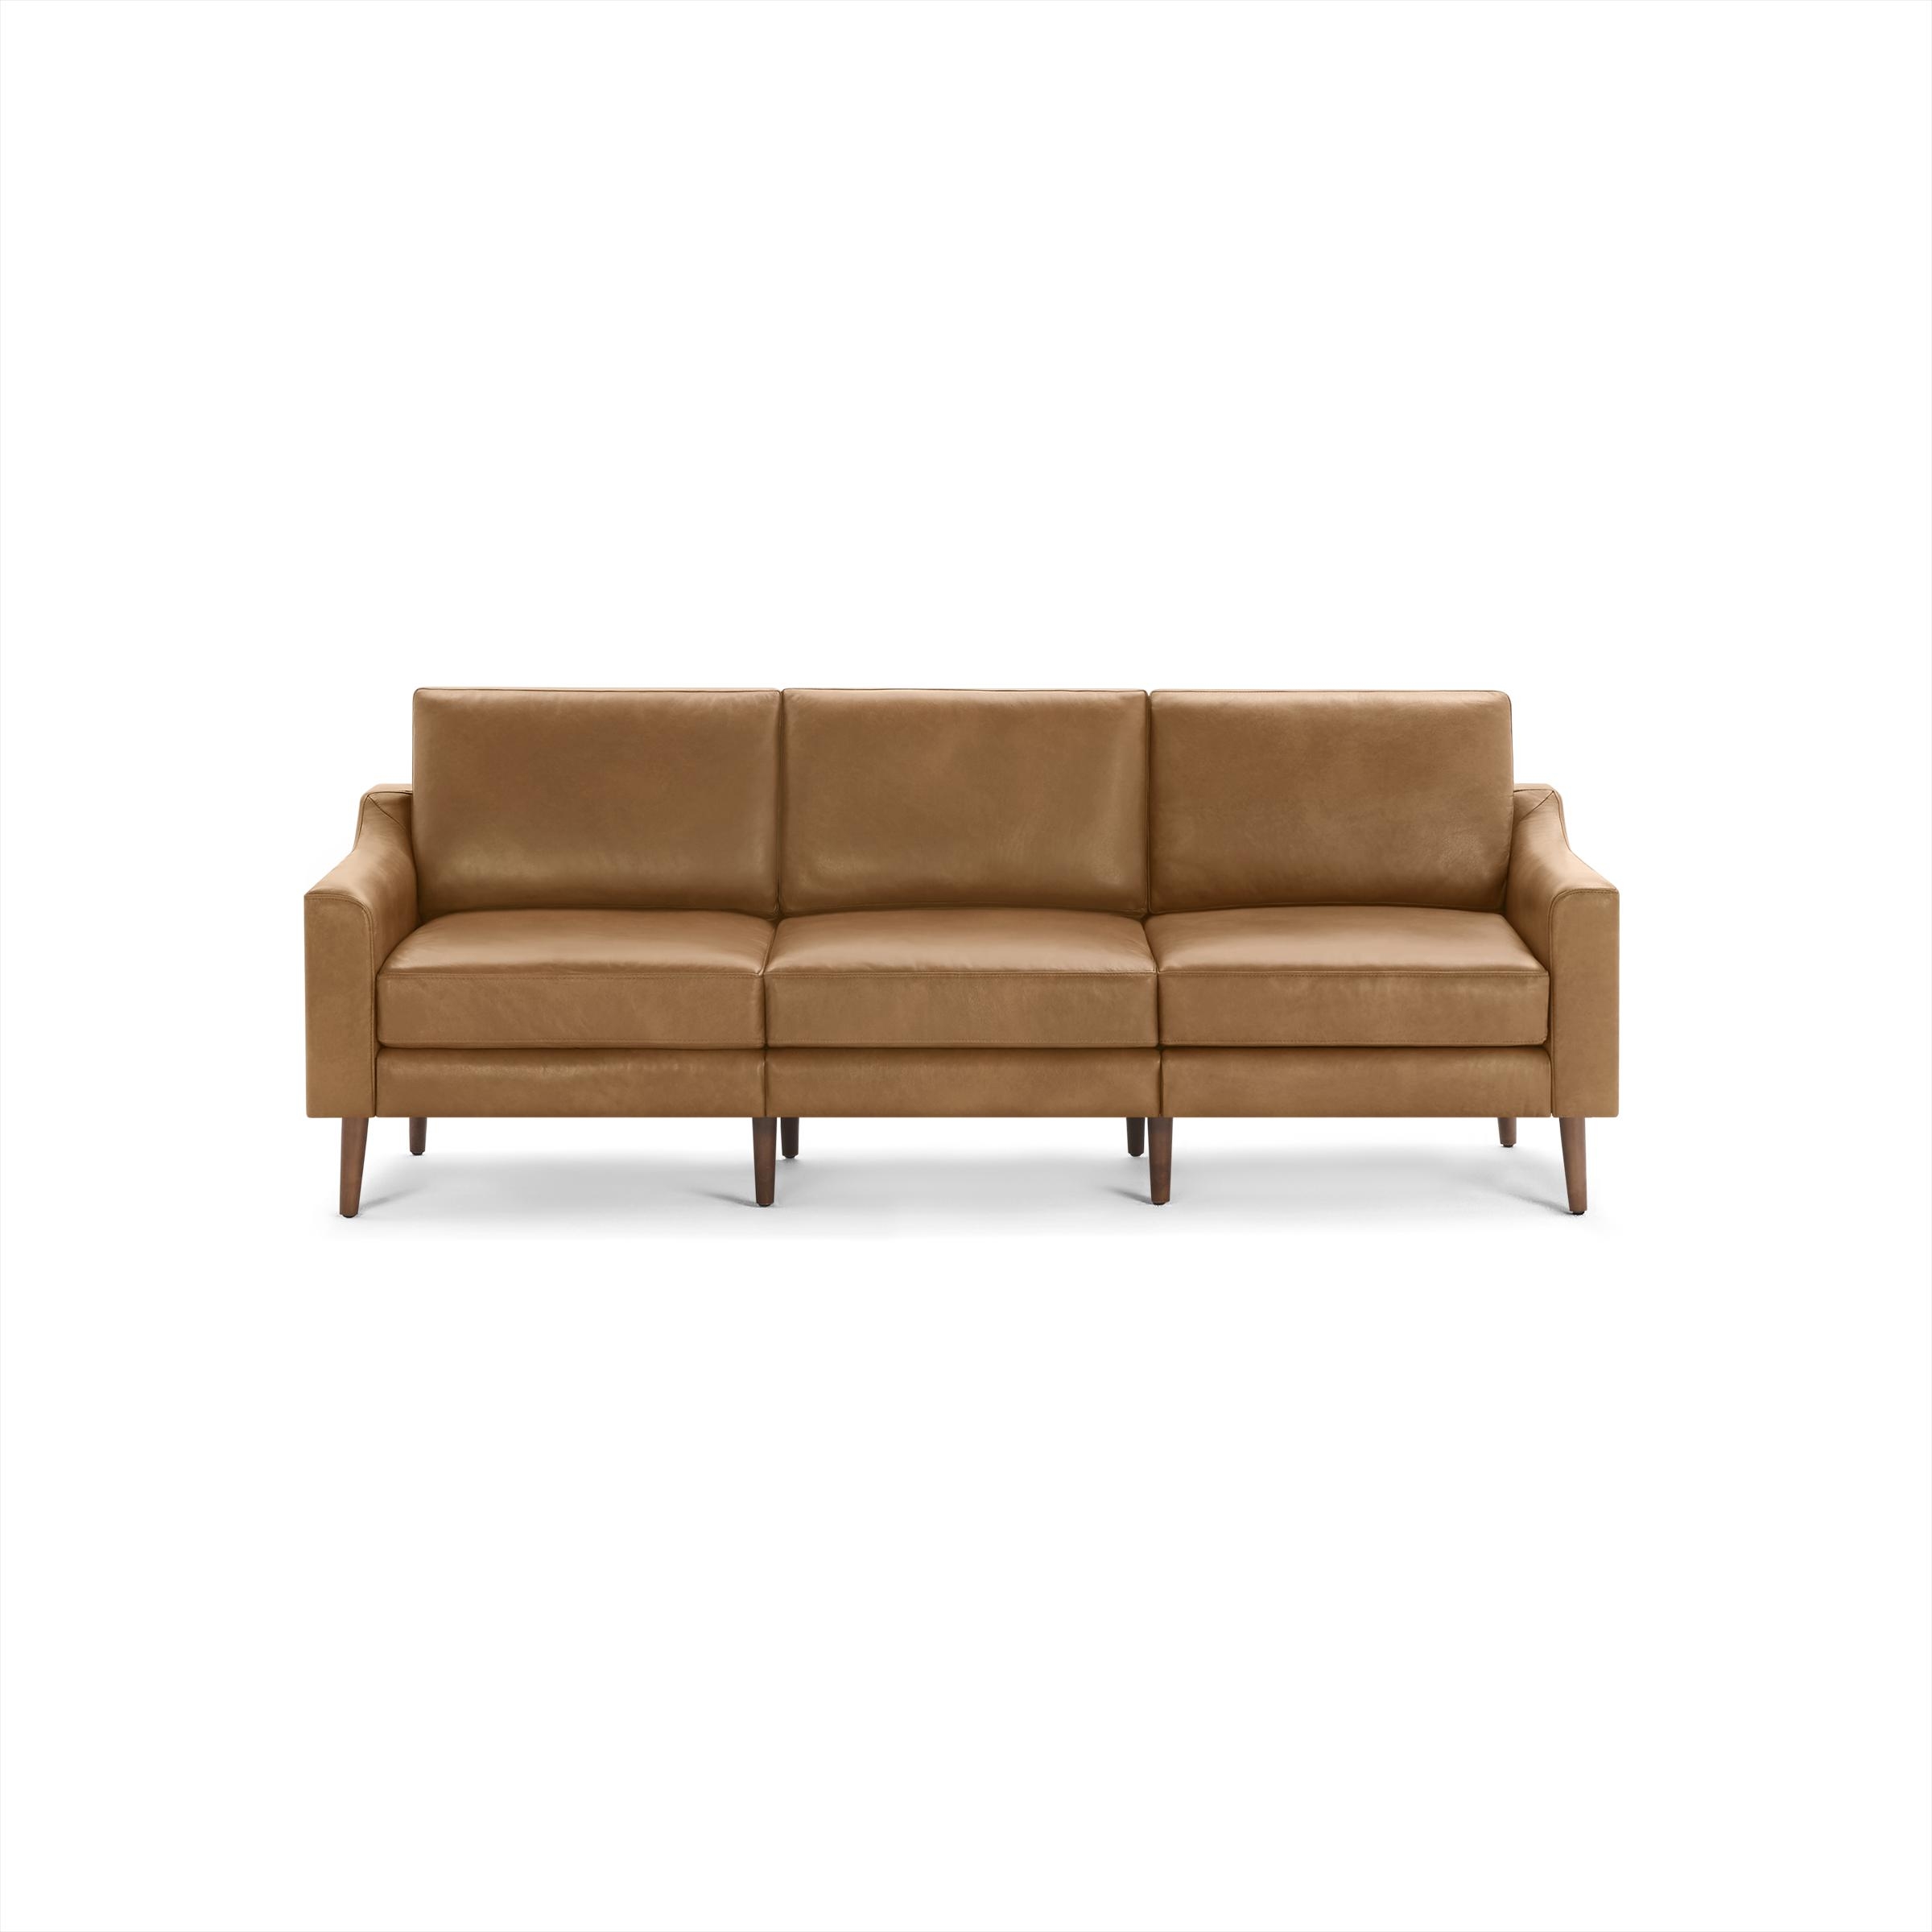 Nomad Leather Sofa in Camel, Walnut Legs, Leg Finish: WalnutLegs - Image 0